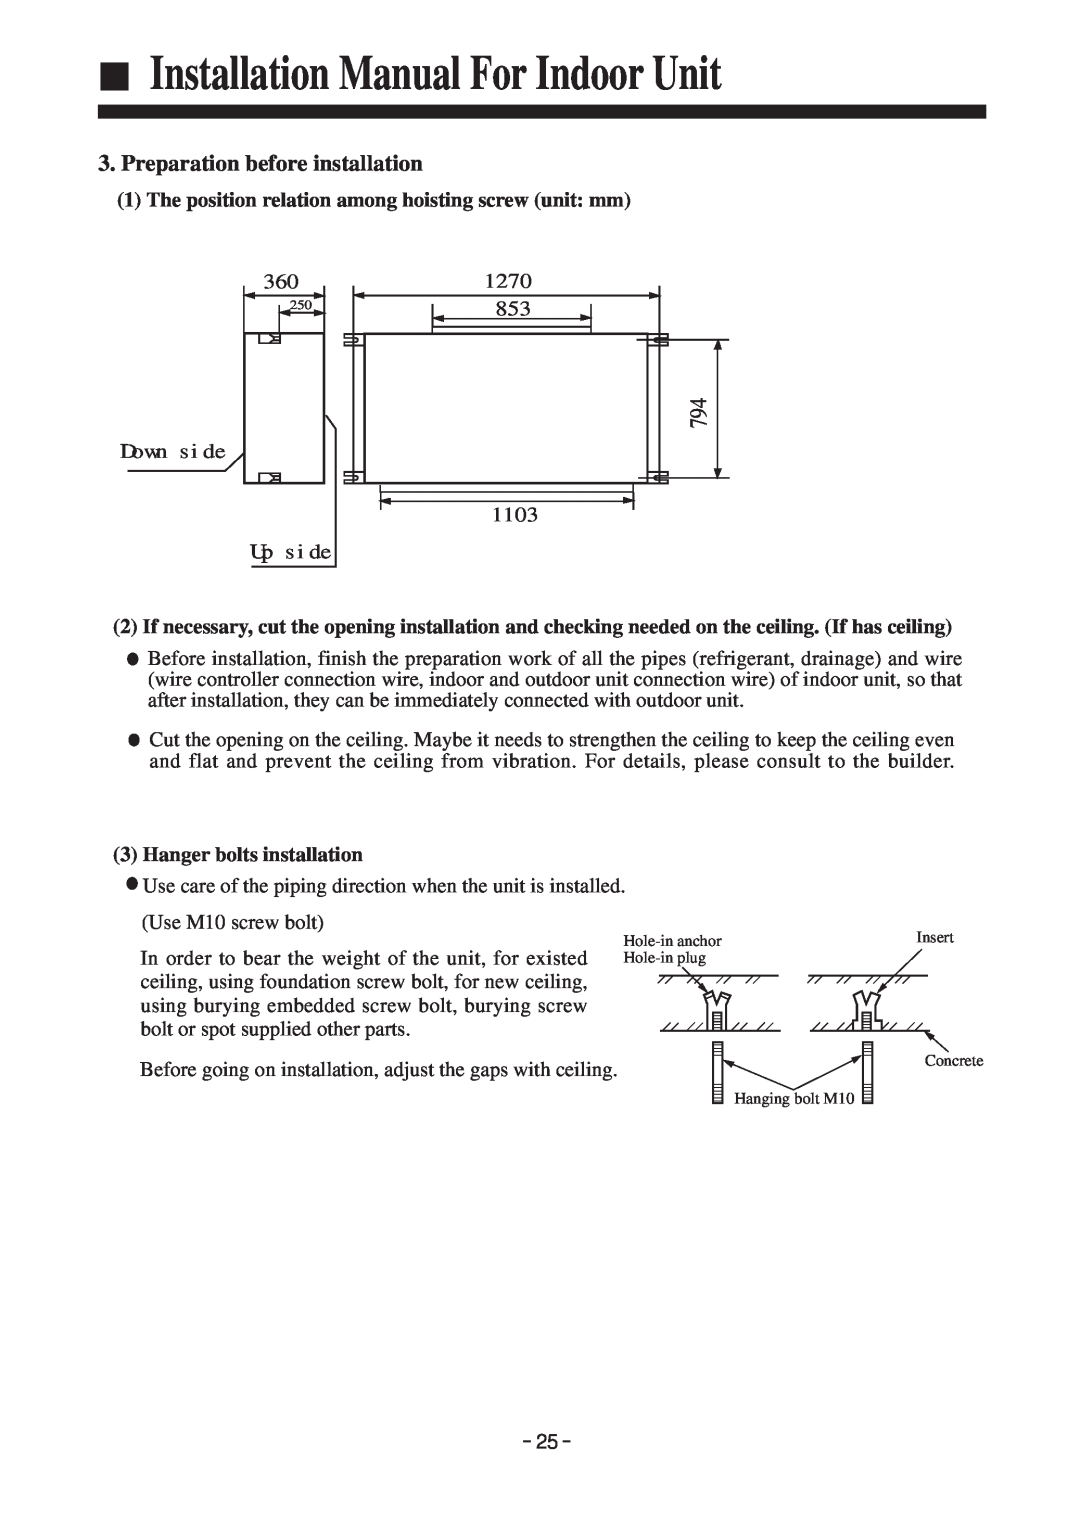 Haier HDU-42CF03/H installation manual Installation Manual For Indoor Unit, Preparation before installation 